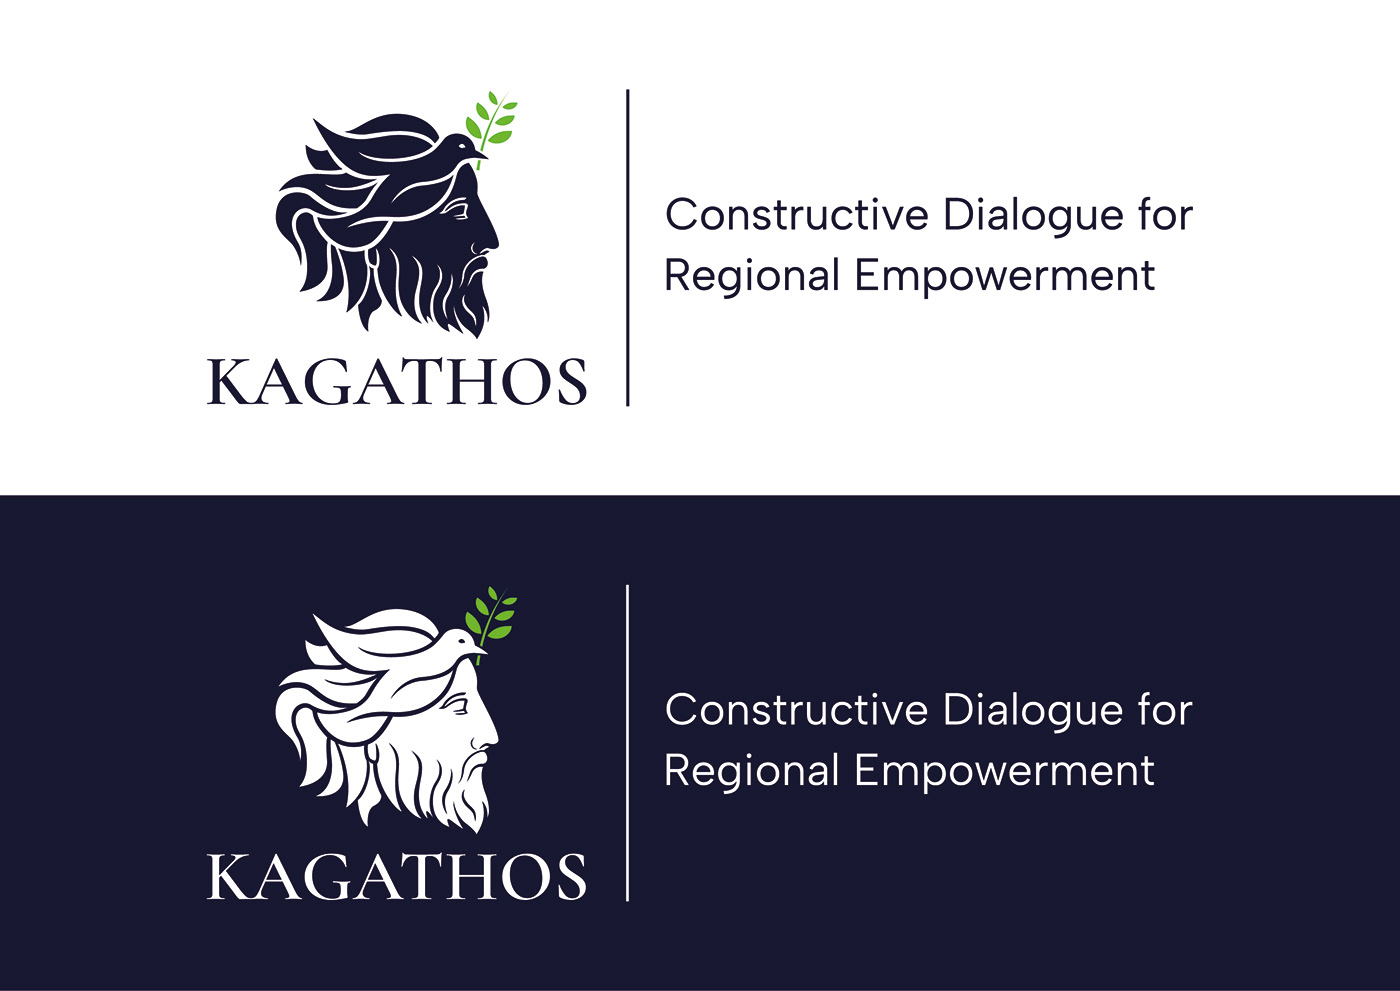 Greece greek ancient greece greek mythology pigeon logo brand identity Logo Design Corporate Identity Kadmos